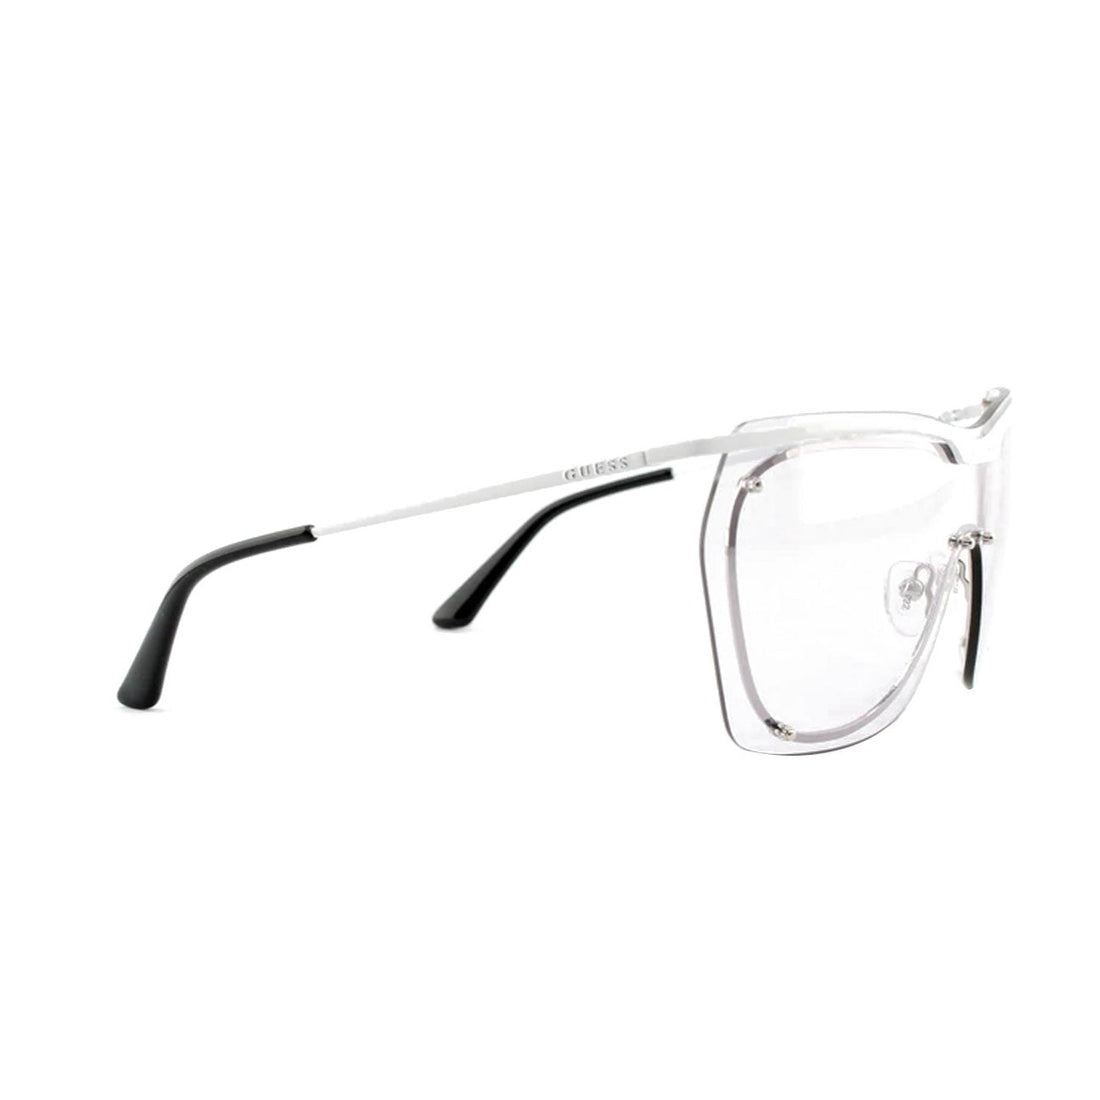 Guess Sunglasses | Model GU 7720 - White/Silver